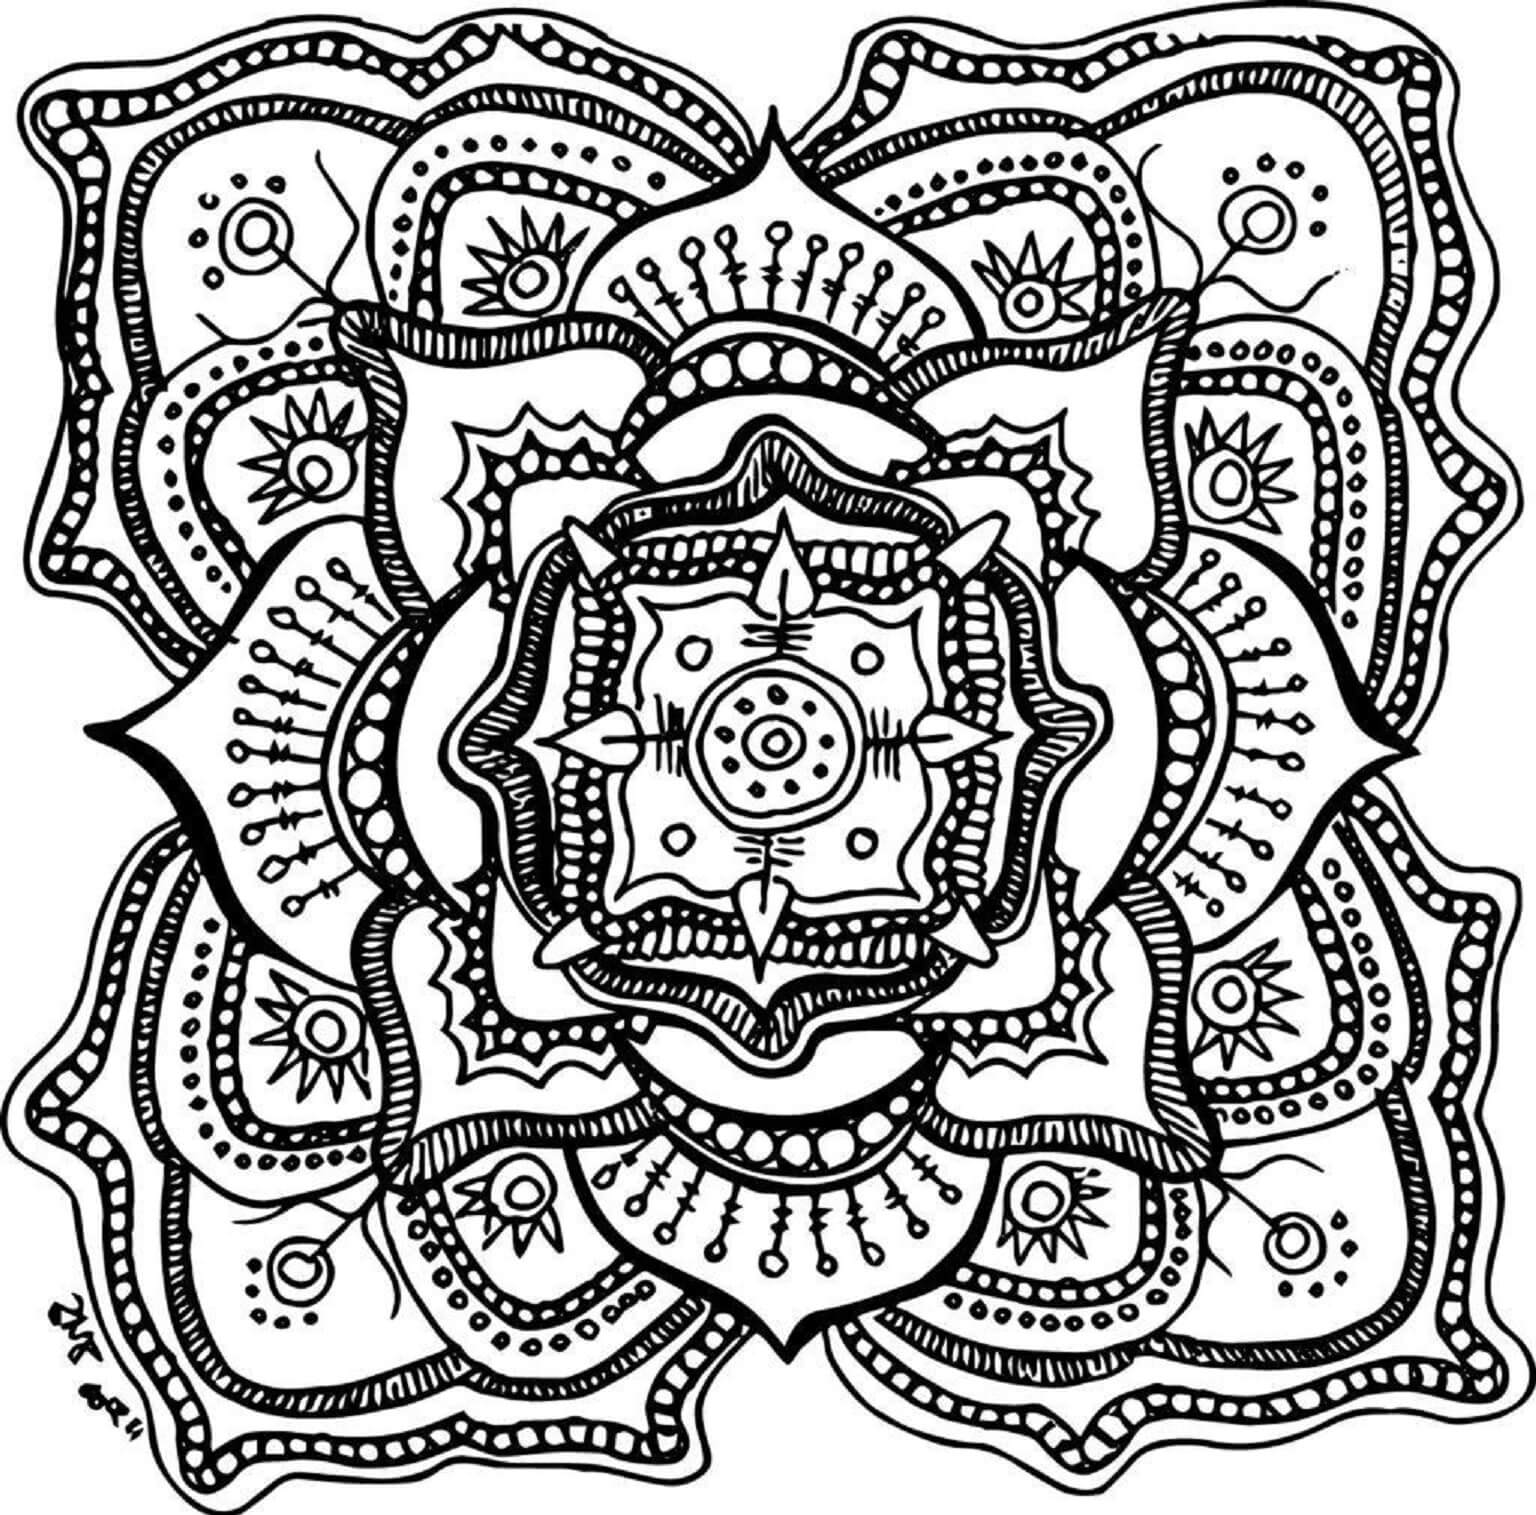 Mandala Halloween Coloring Page - Sheet 3 Mandalas